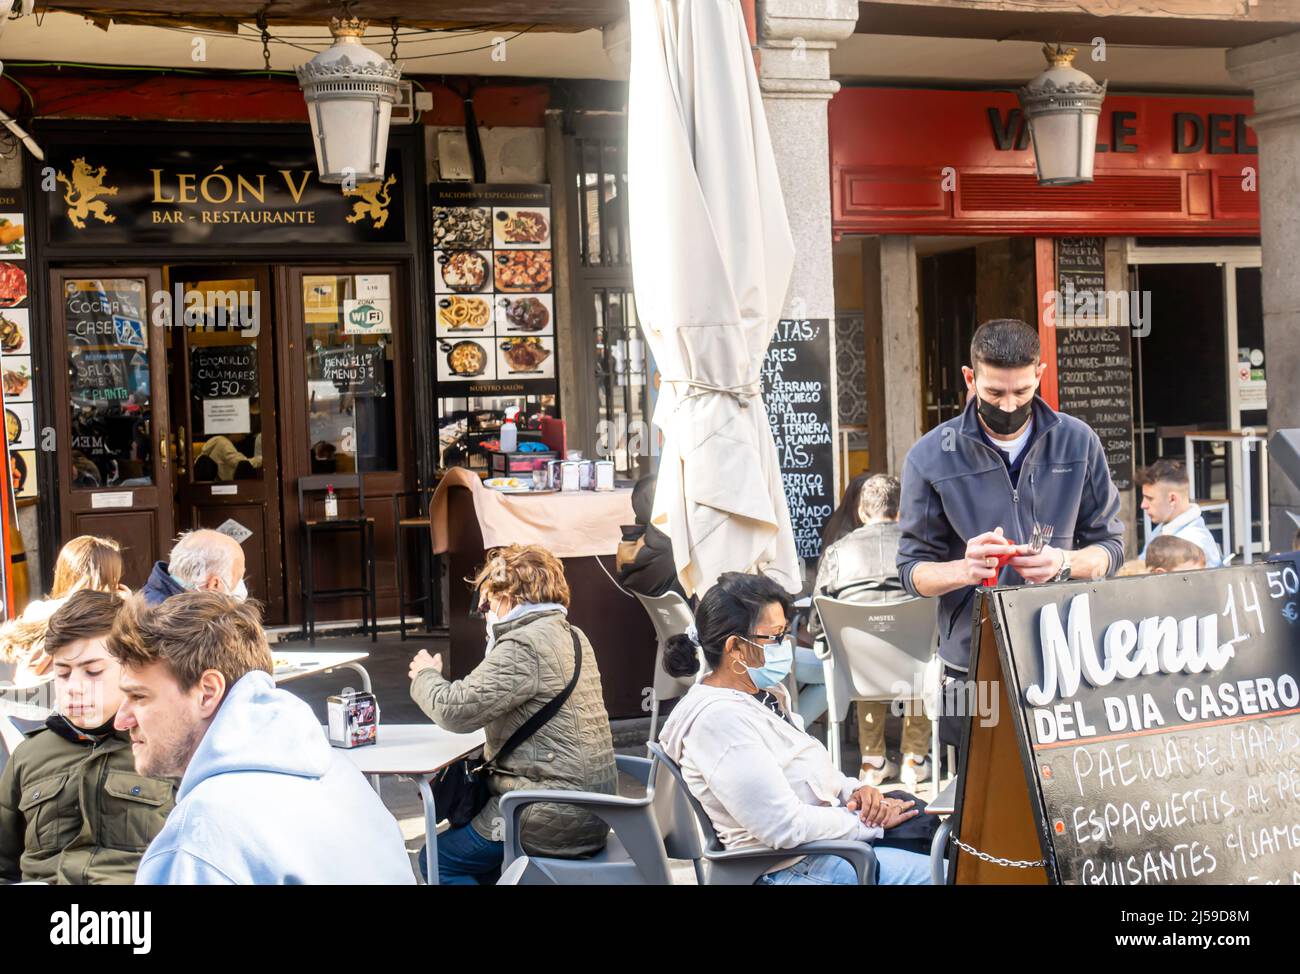 Restaurant Leon V, near Plaza Mayor, Madrid, Spain. Waiter and patrons in face masks Stock Photo